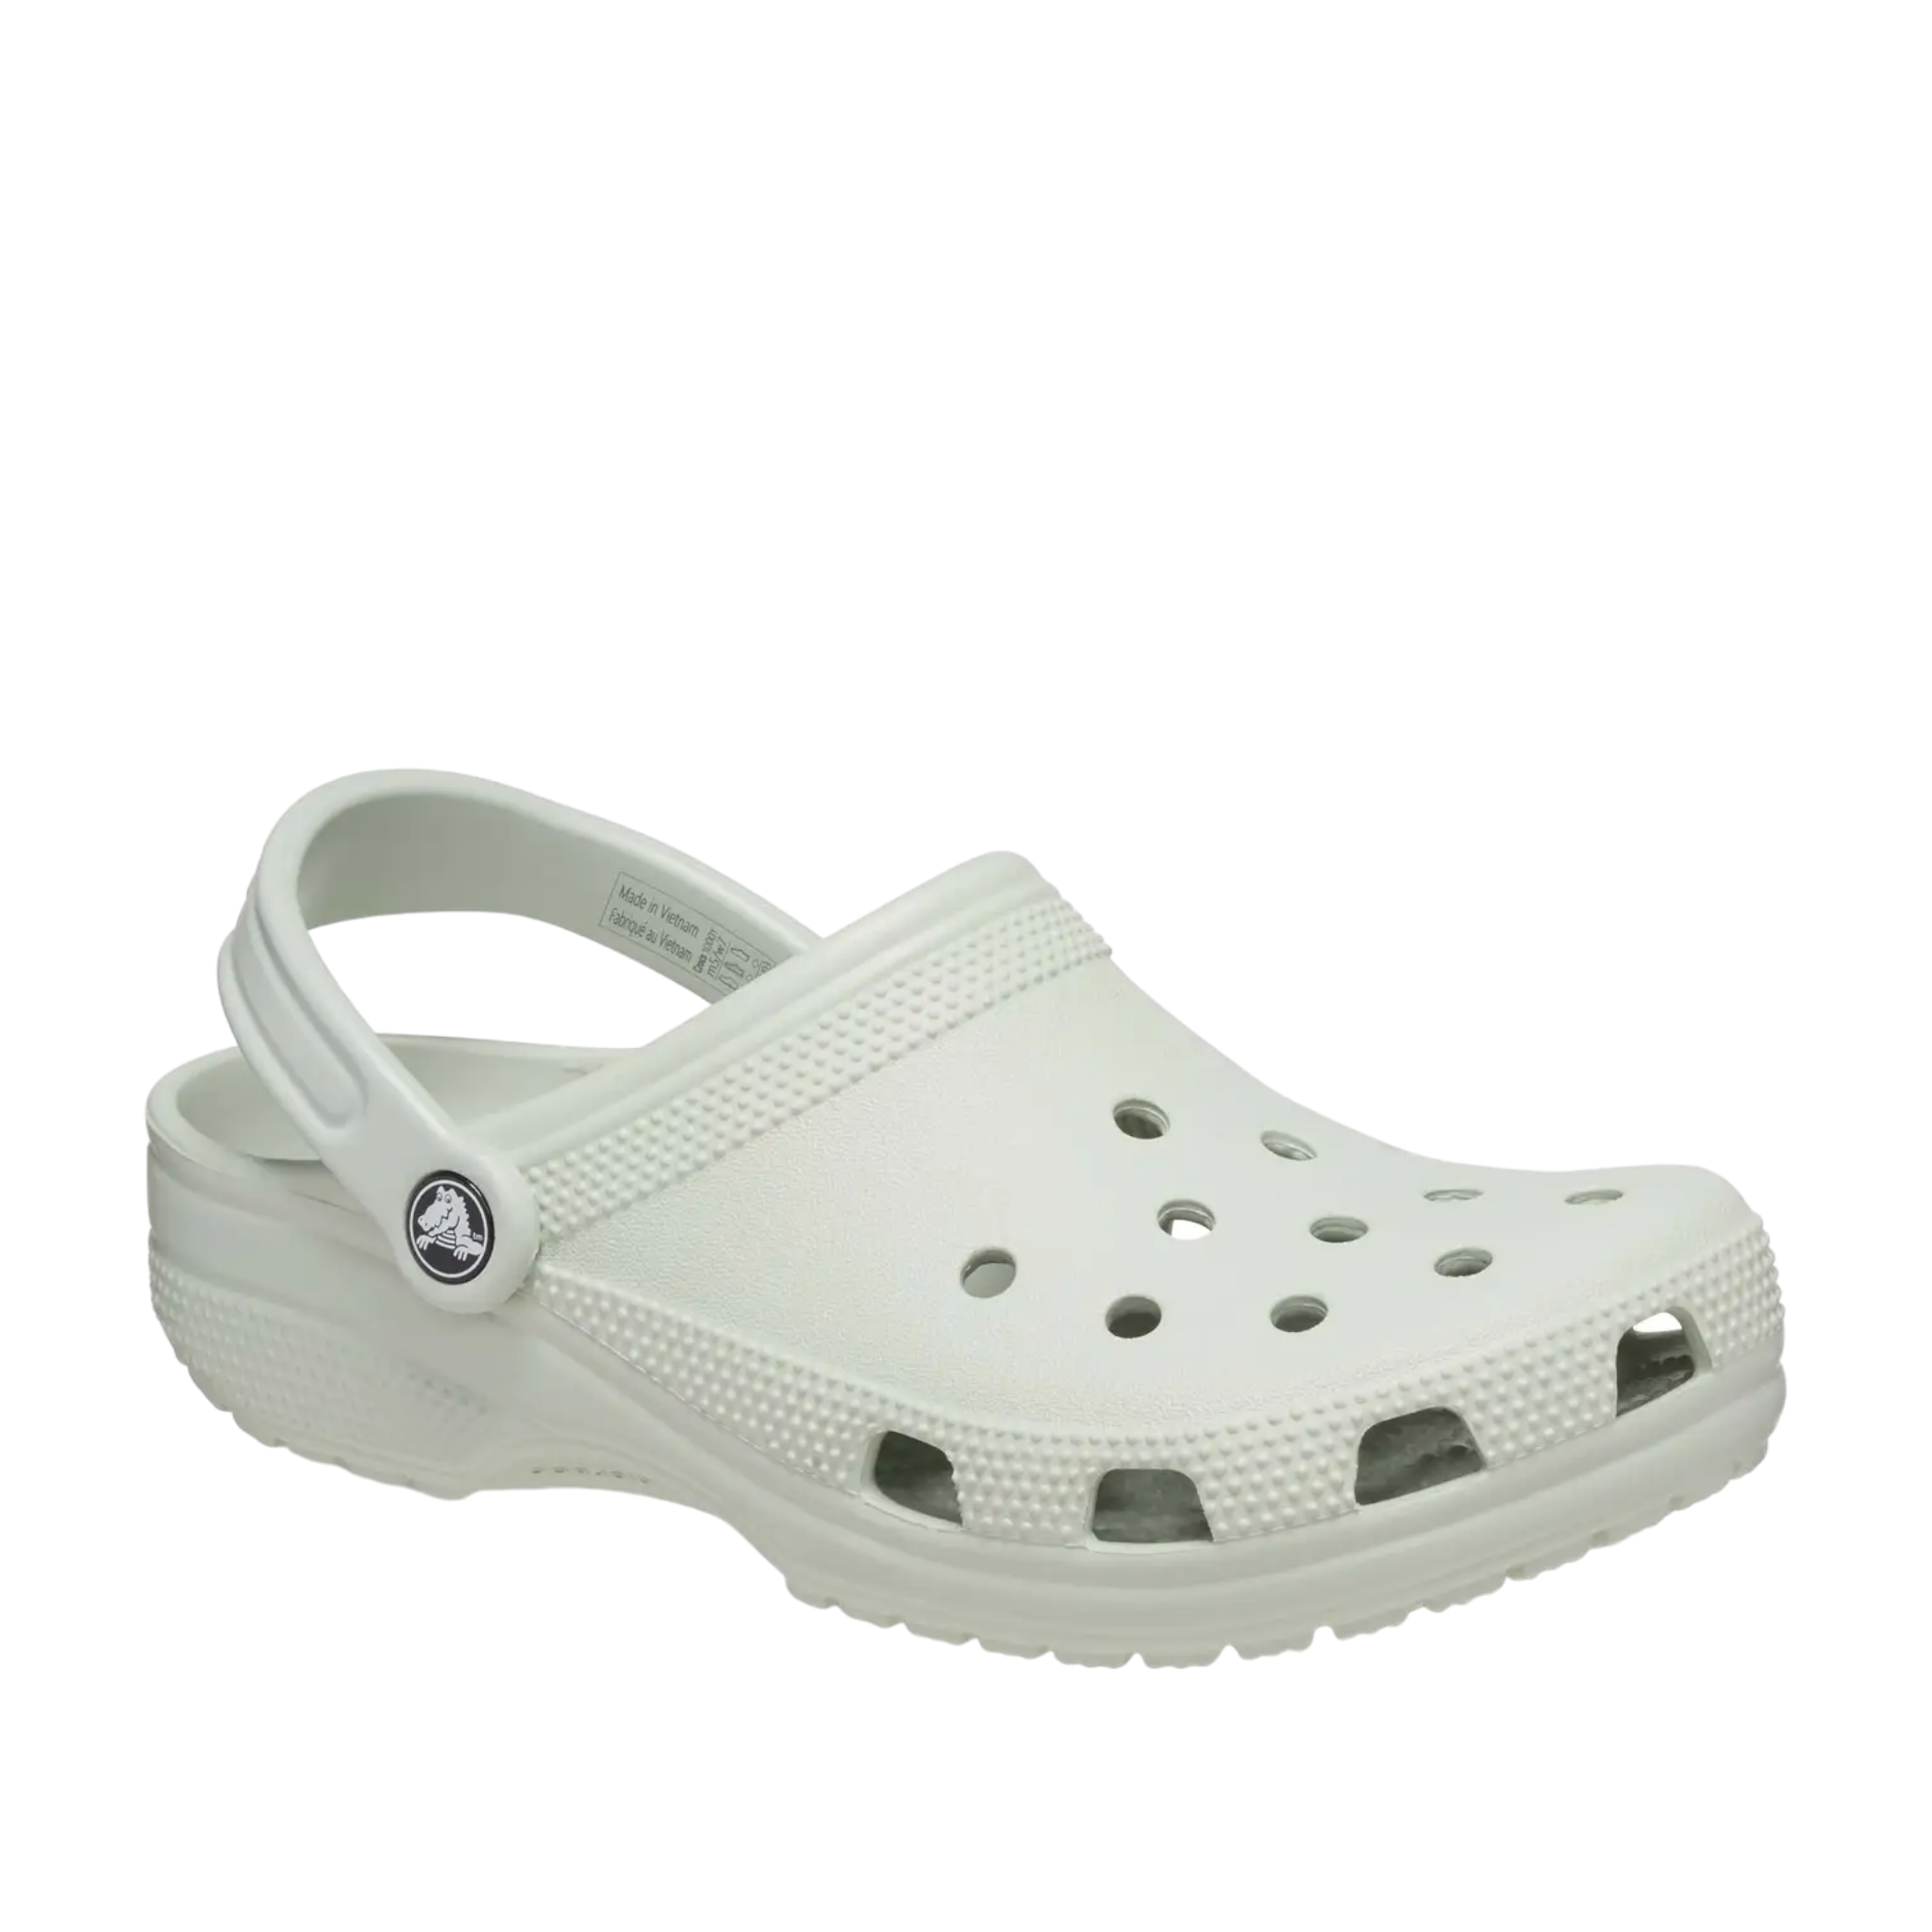 Shop Classic Clog Crocs - with shoe&amp;me - from Crocs - Clogs - Clog, Mens, Summer, Winter, Womens